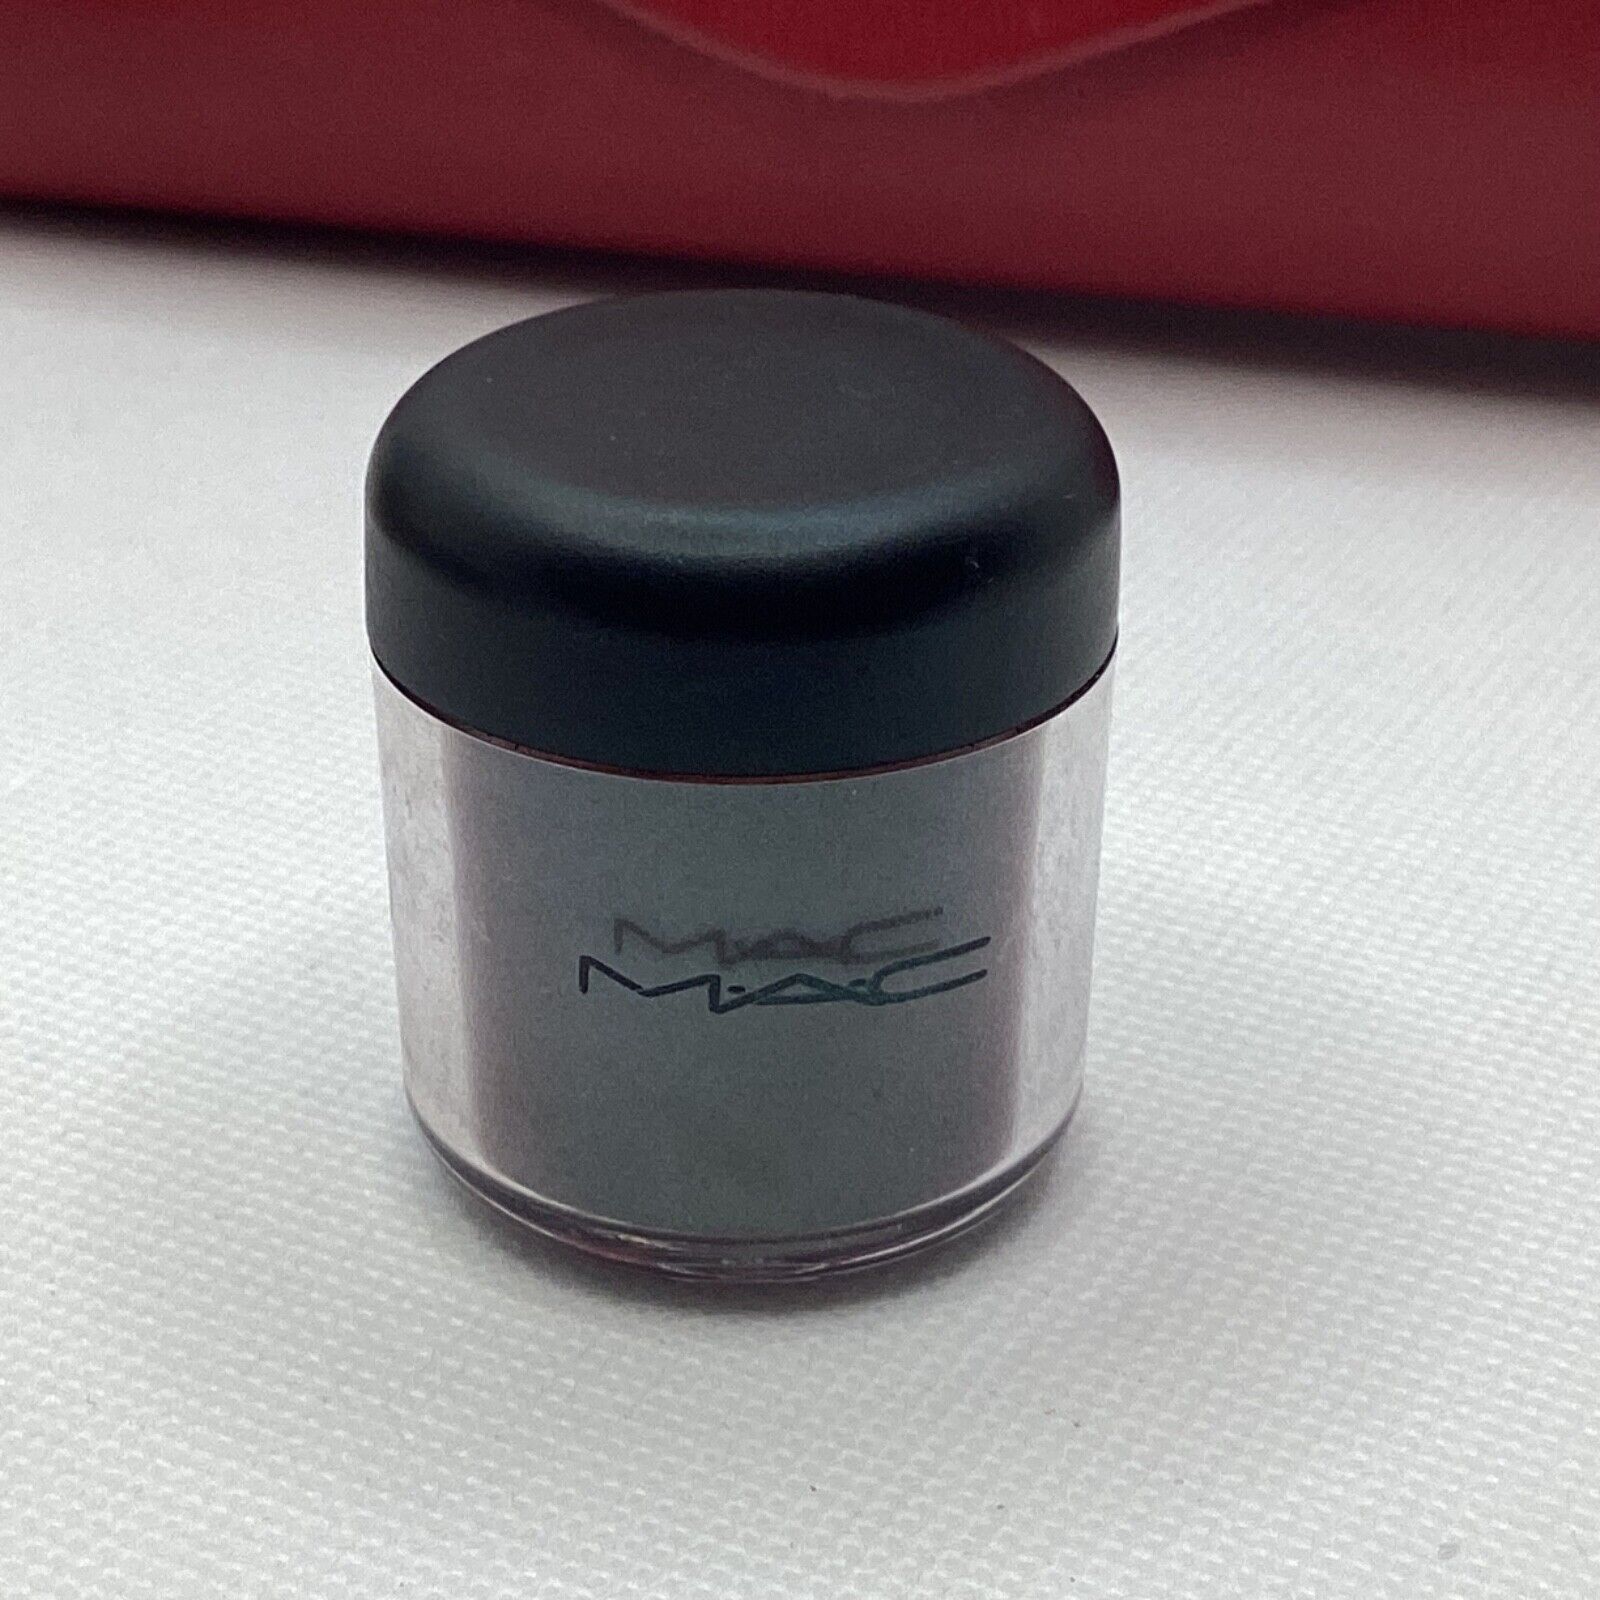 Rare MAC Pigment Original Size Jar Blue Brown Discontinued 0.26 US Ounces